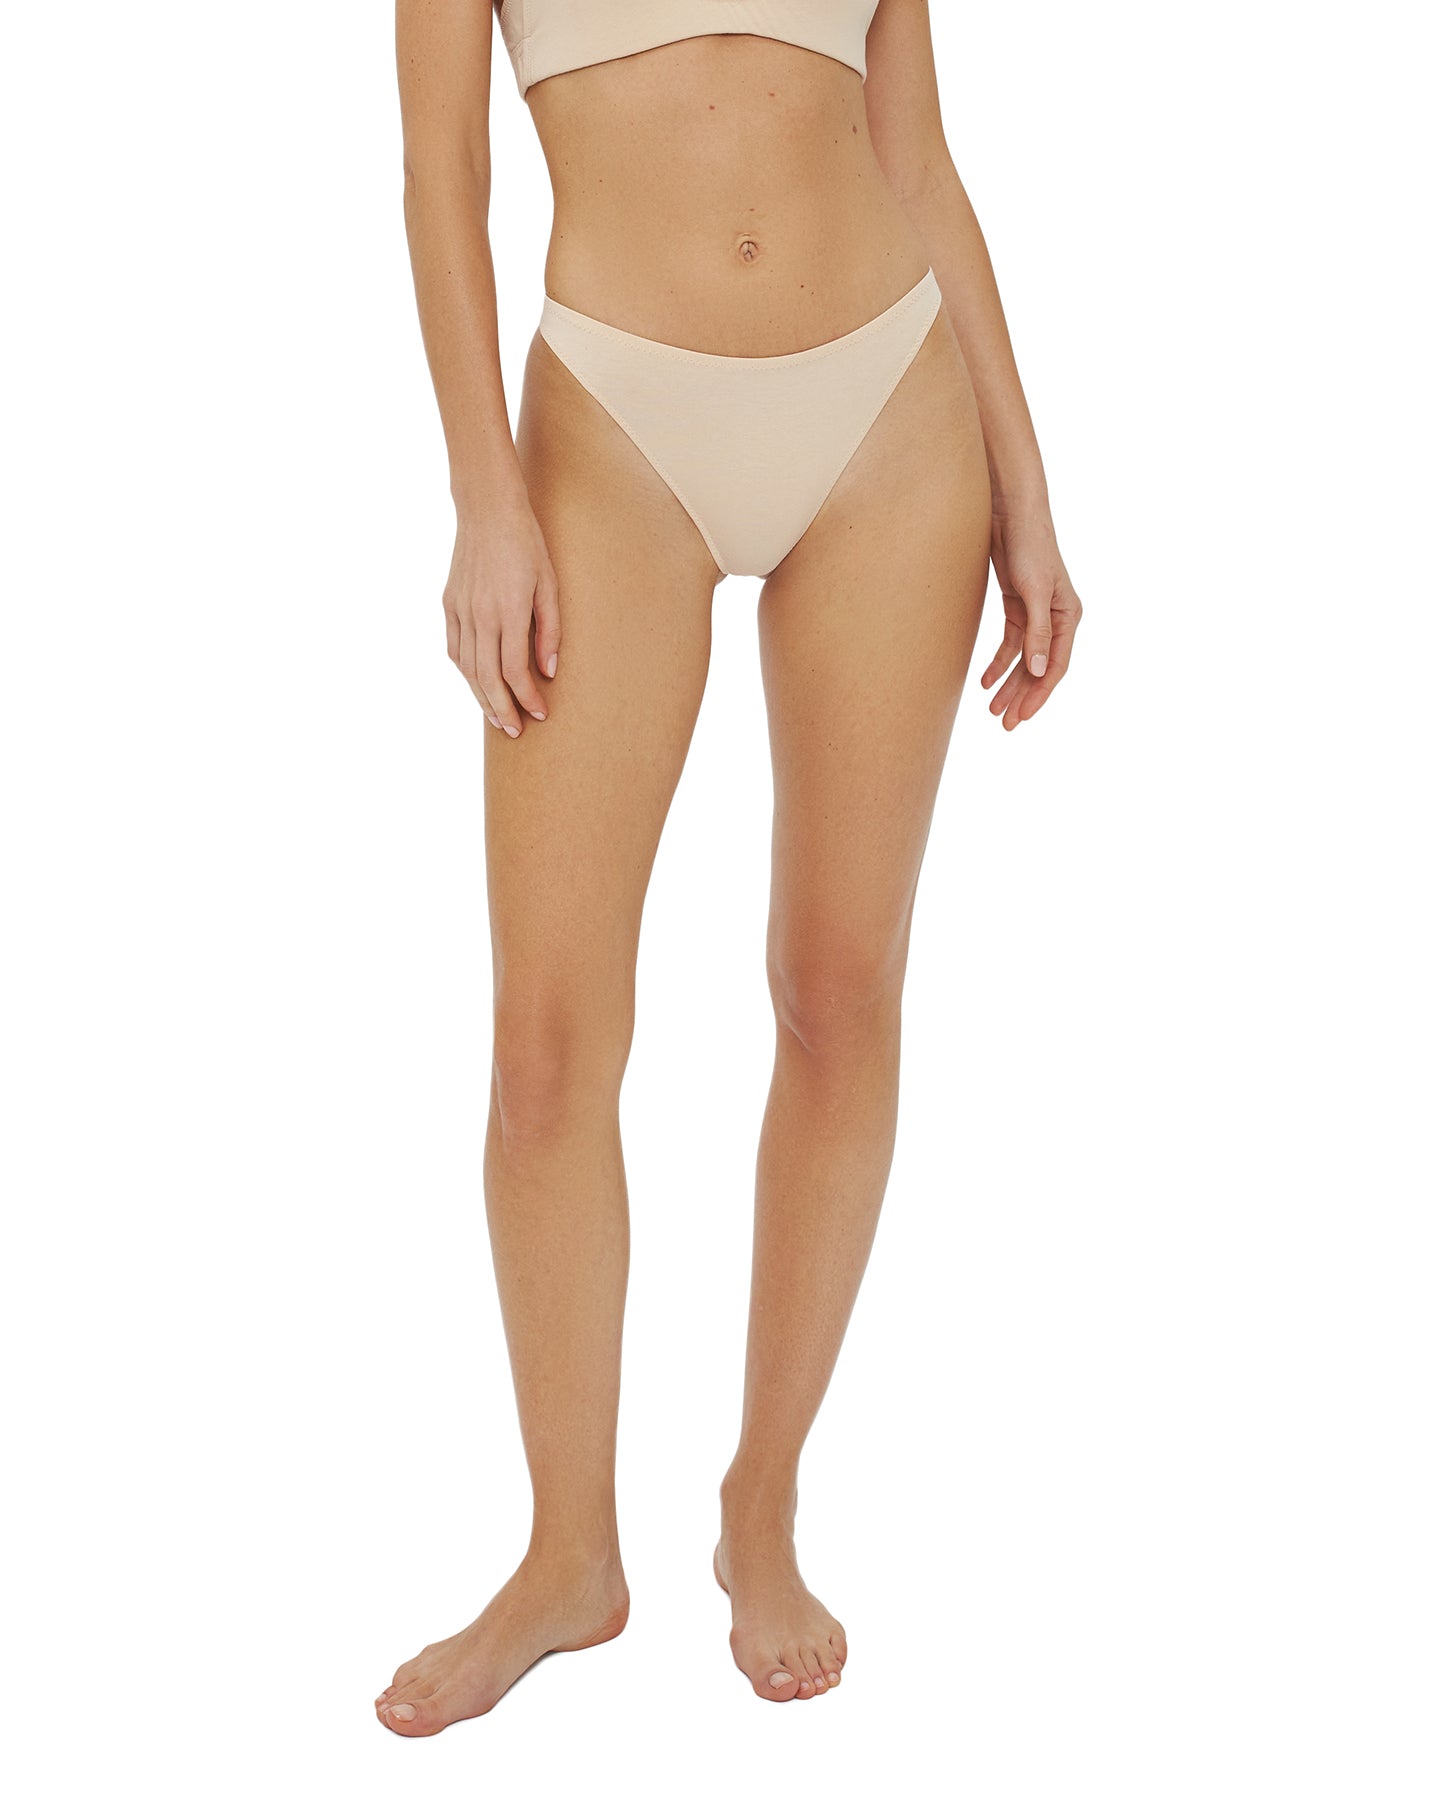 Women's organic cotton thong in chestnut (mid nude) – Y.O.U underwear